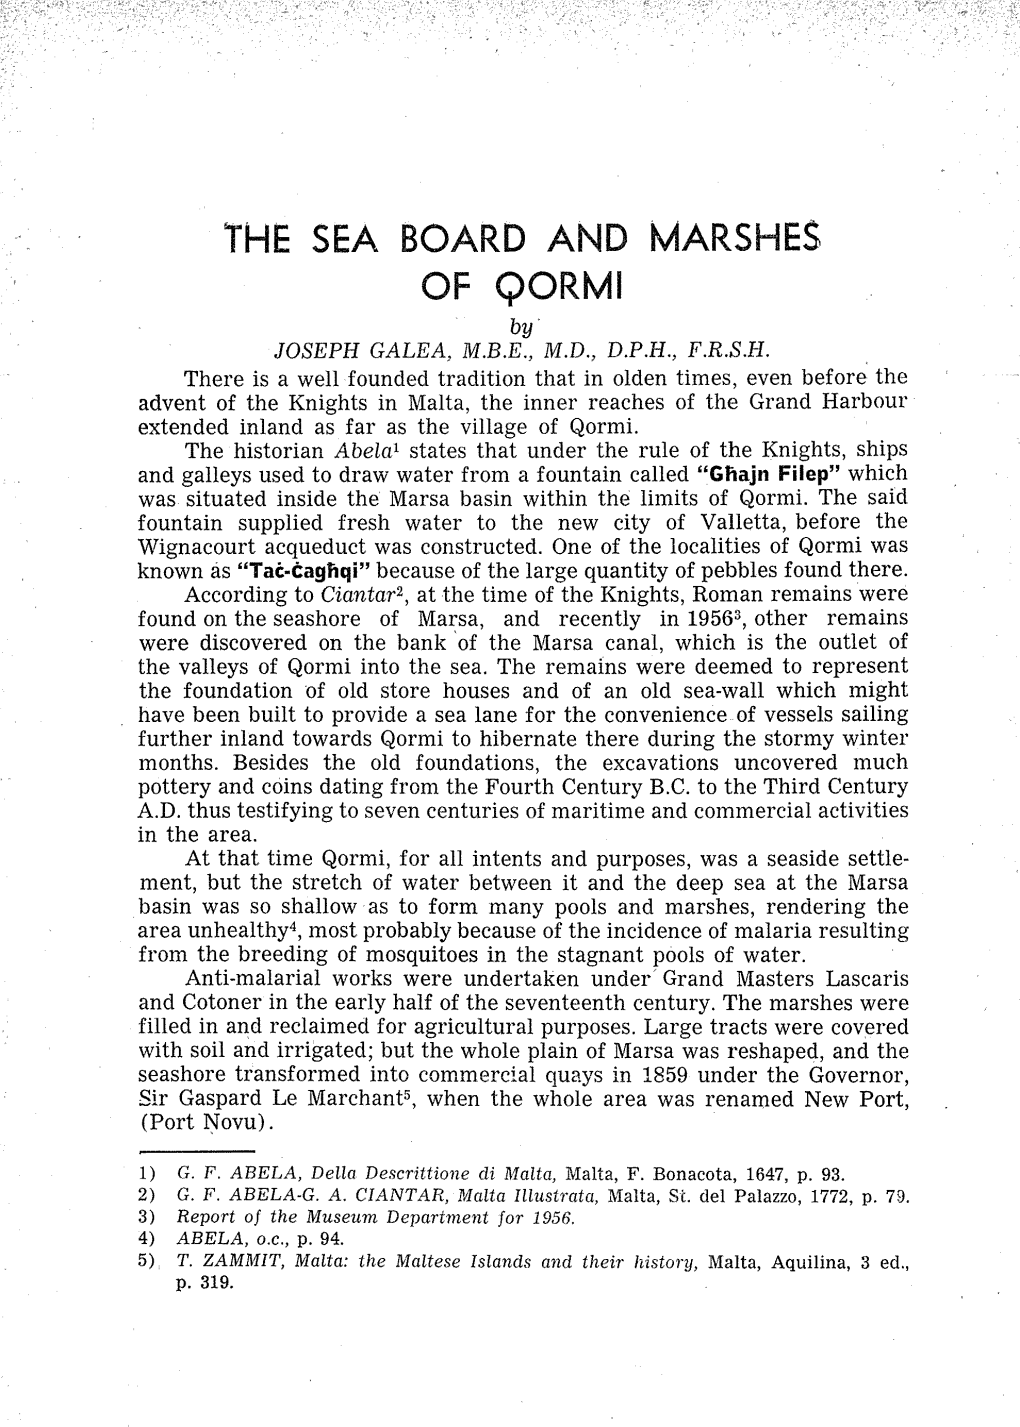 THE SEA BOARD and MARSHES of QORMI by JOSEPH GALEA, M.B.E., M.D., D.P.H., F.R.S.H